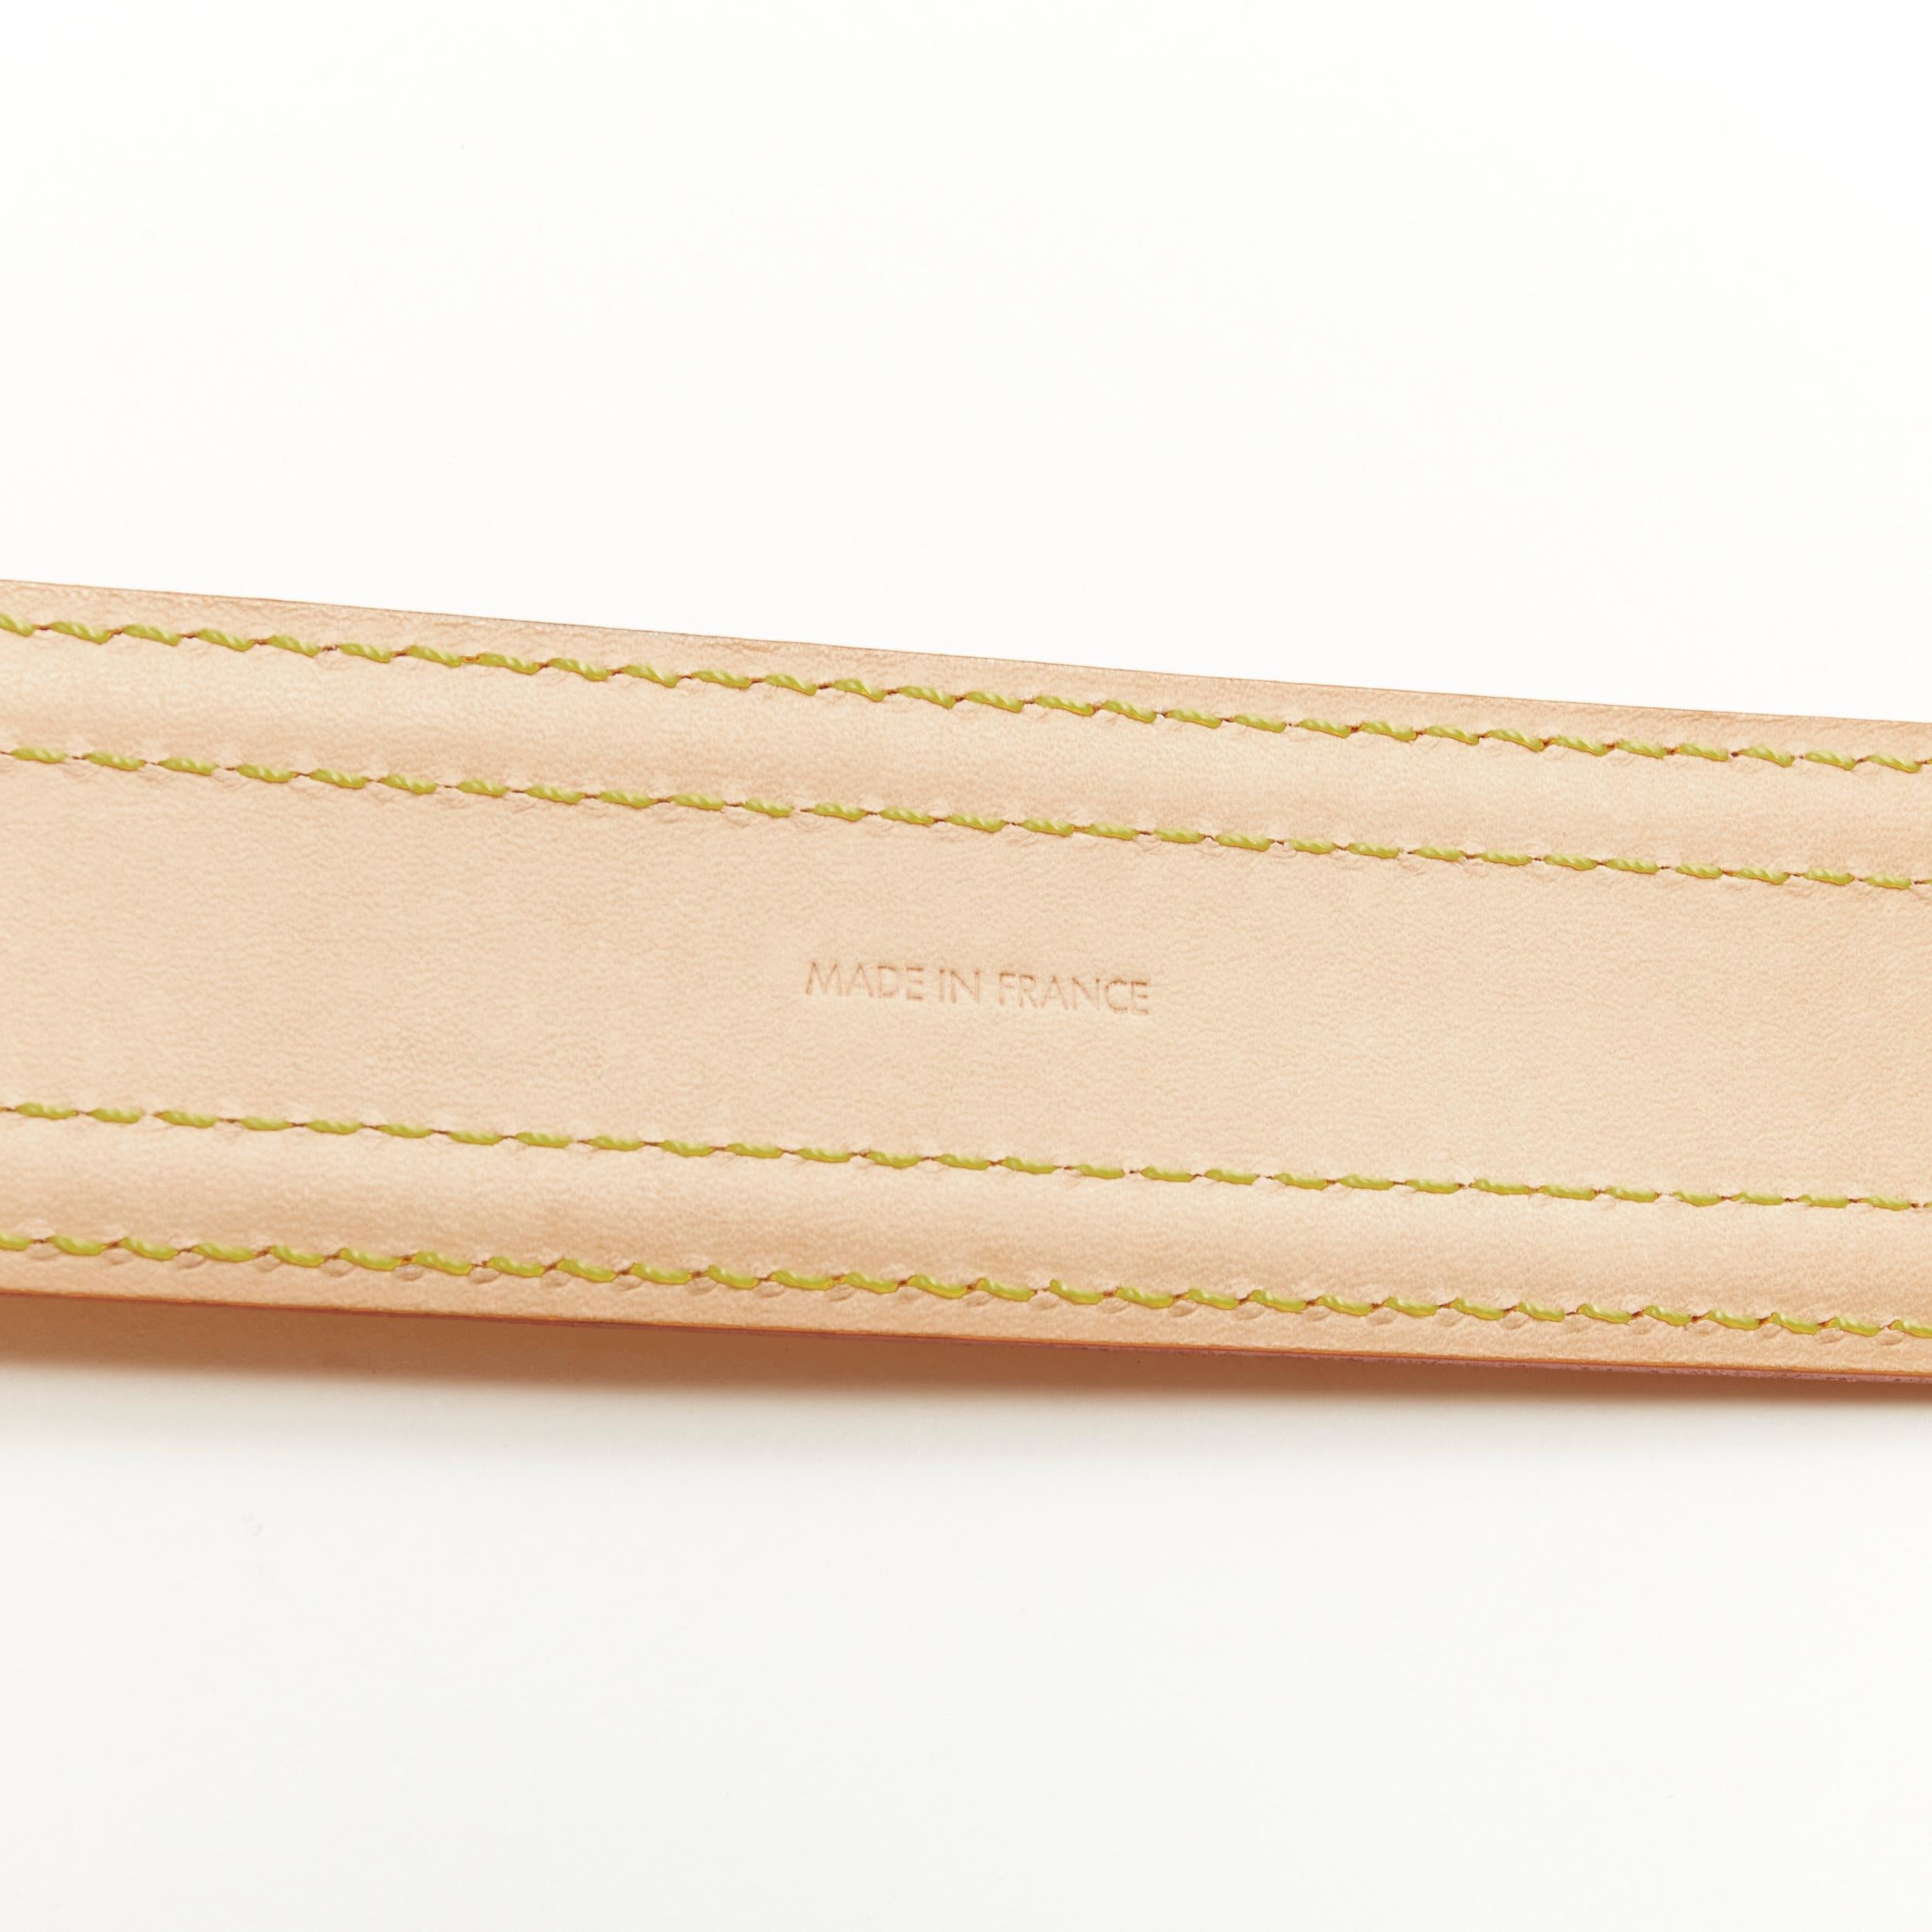 Gold LOUIS VUITTON Vachetta Signature tan leather gold buckle  belt 80cm/32